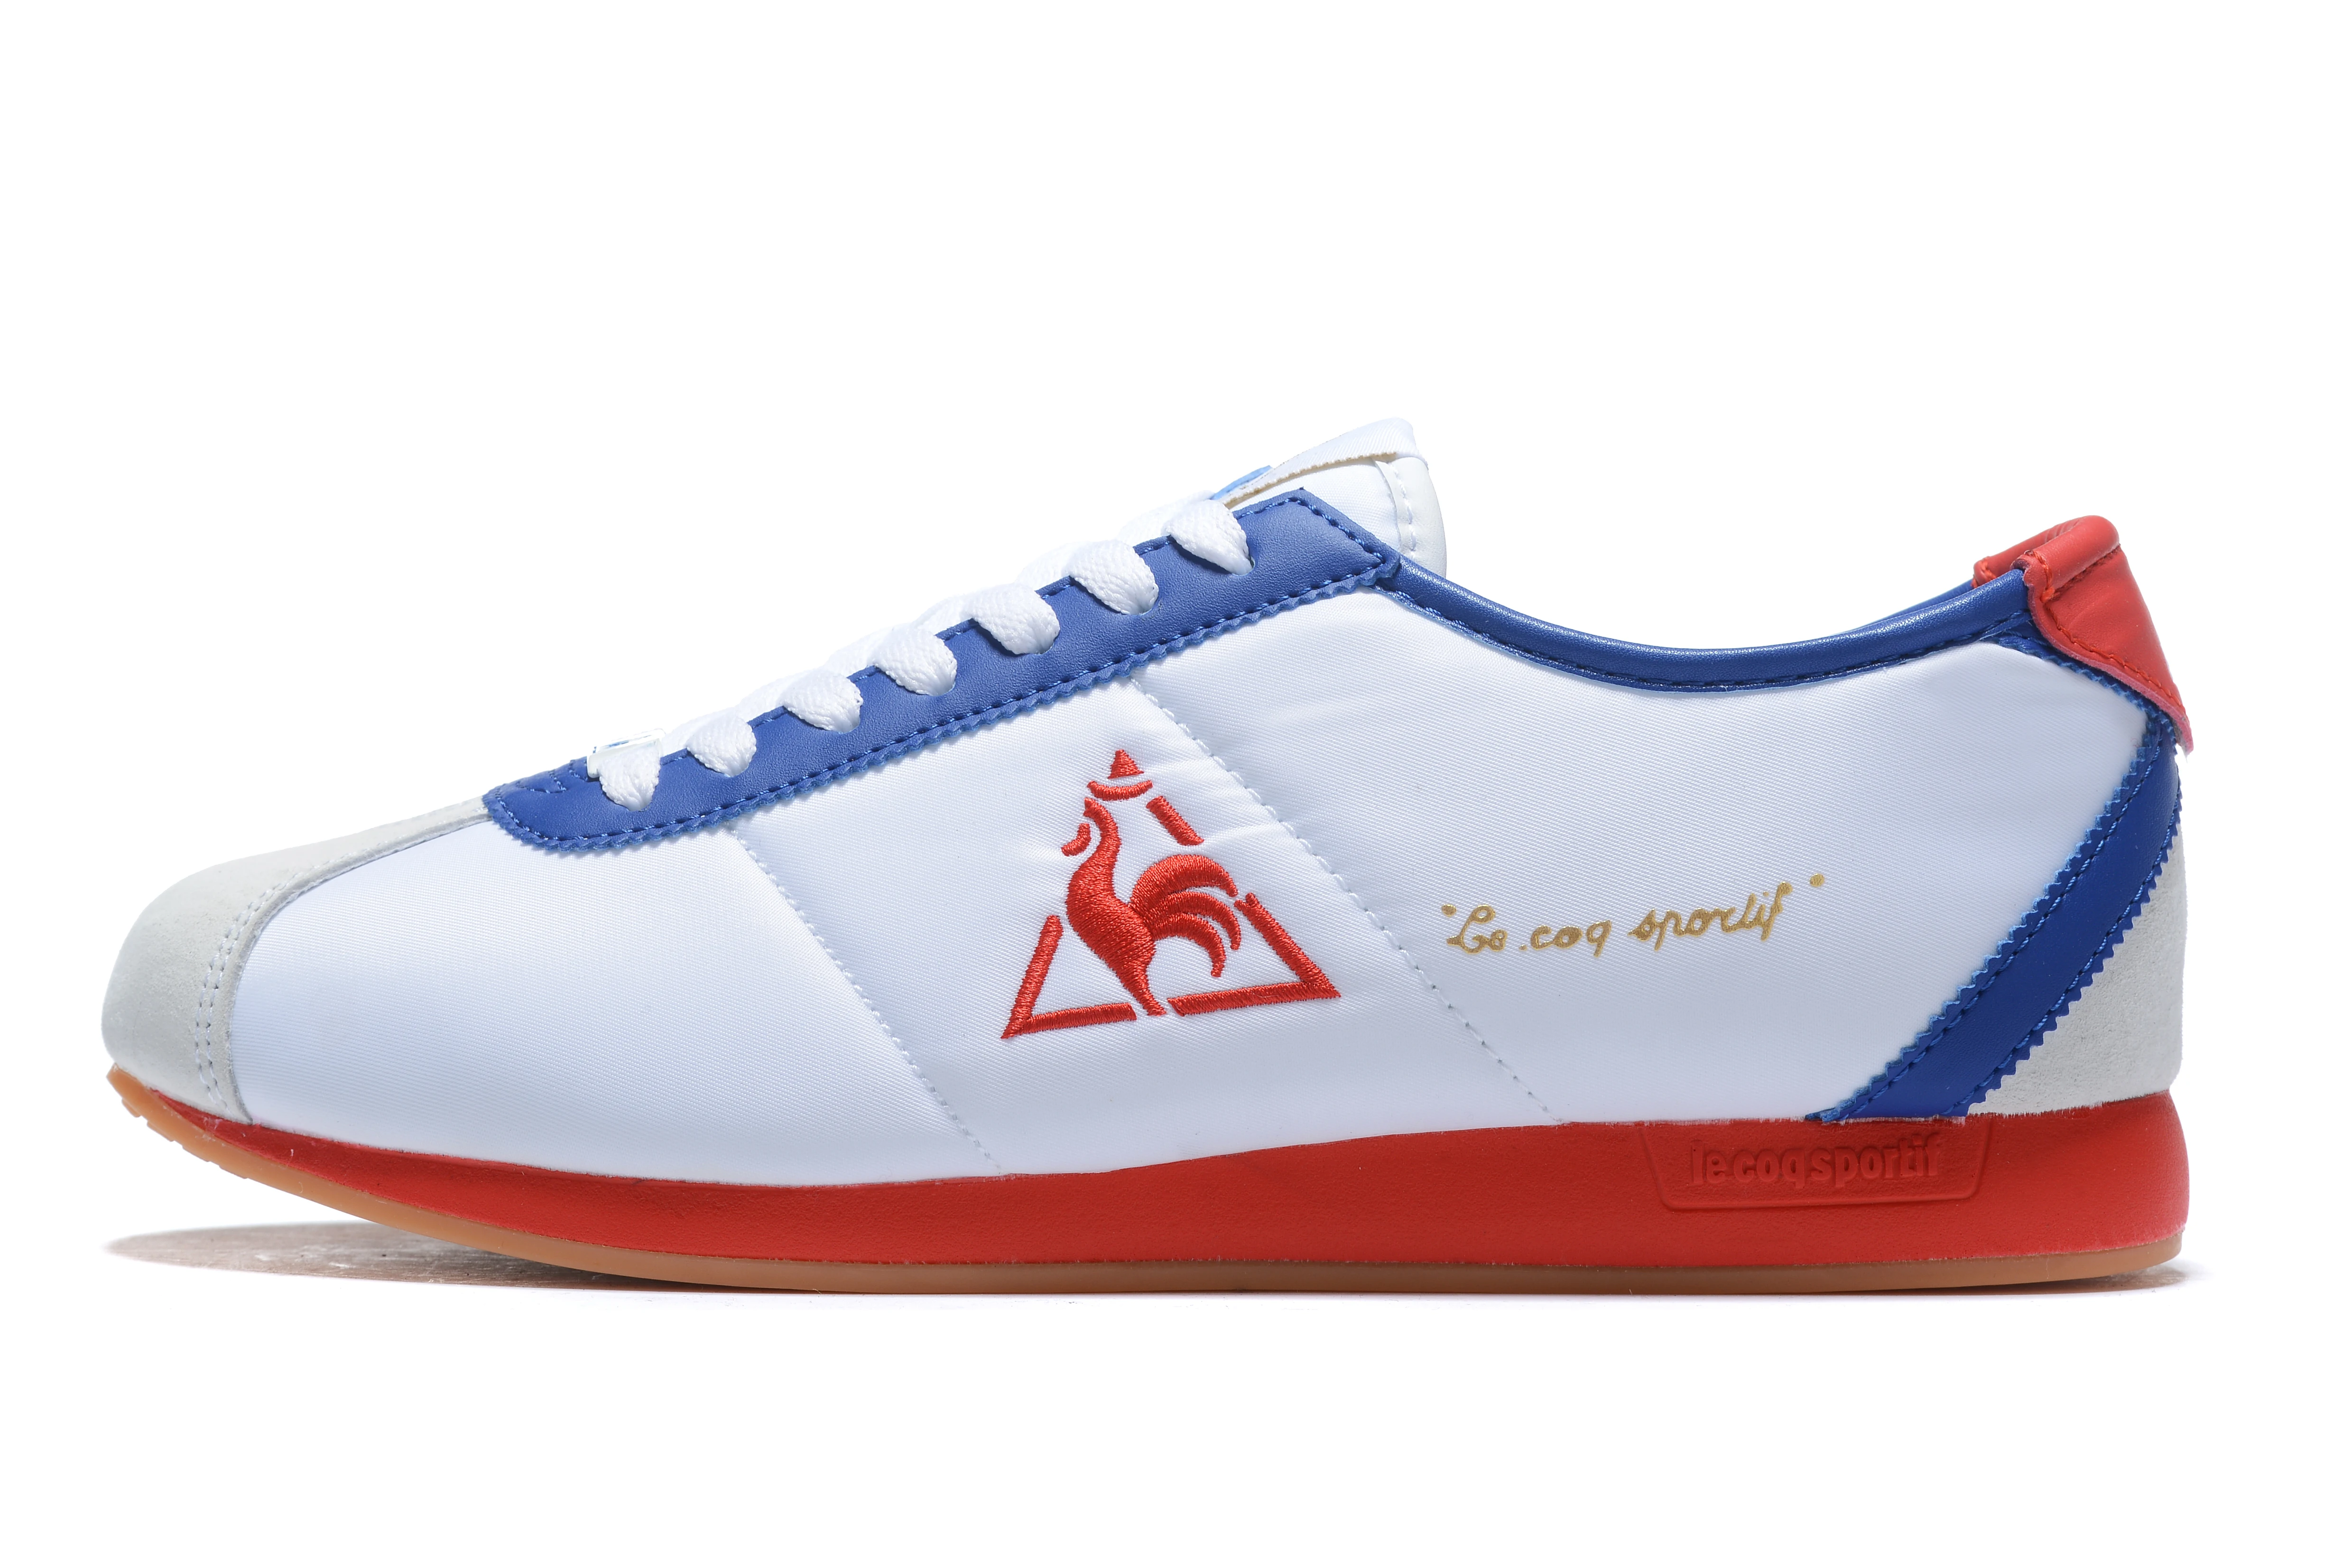 Le Coq Sportif Zapatillas deportivas de tela Oxford para hombre, para correr, varios colores|shoes sneakers|running shoesmens athletic shoes - AliExpress